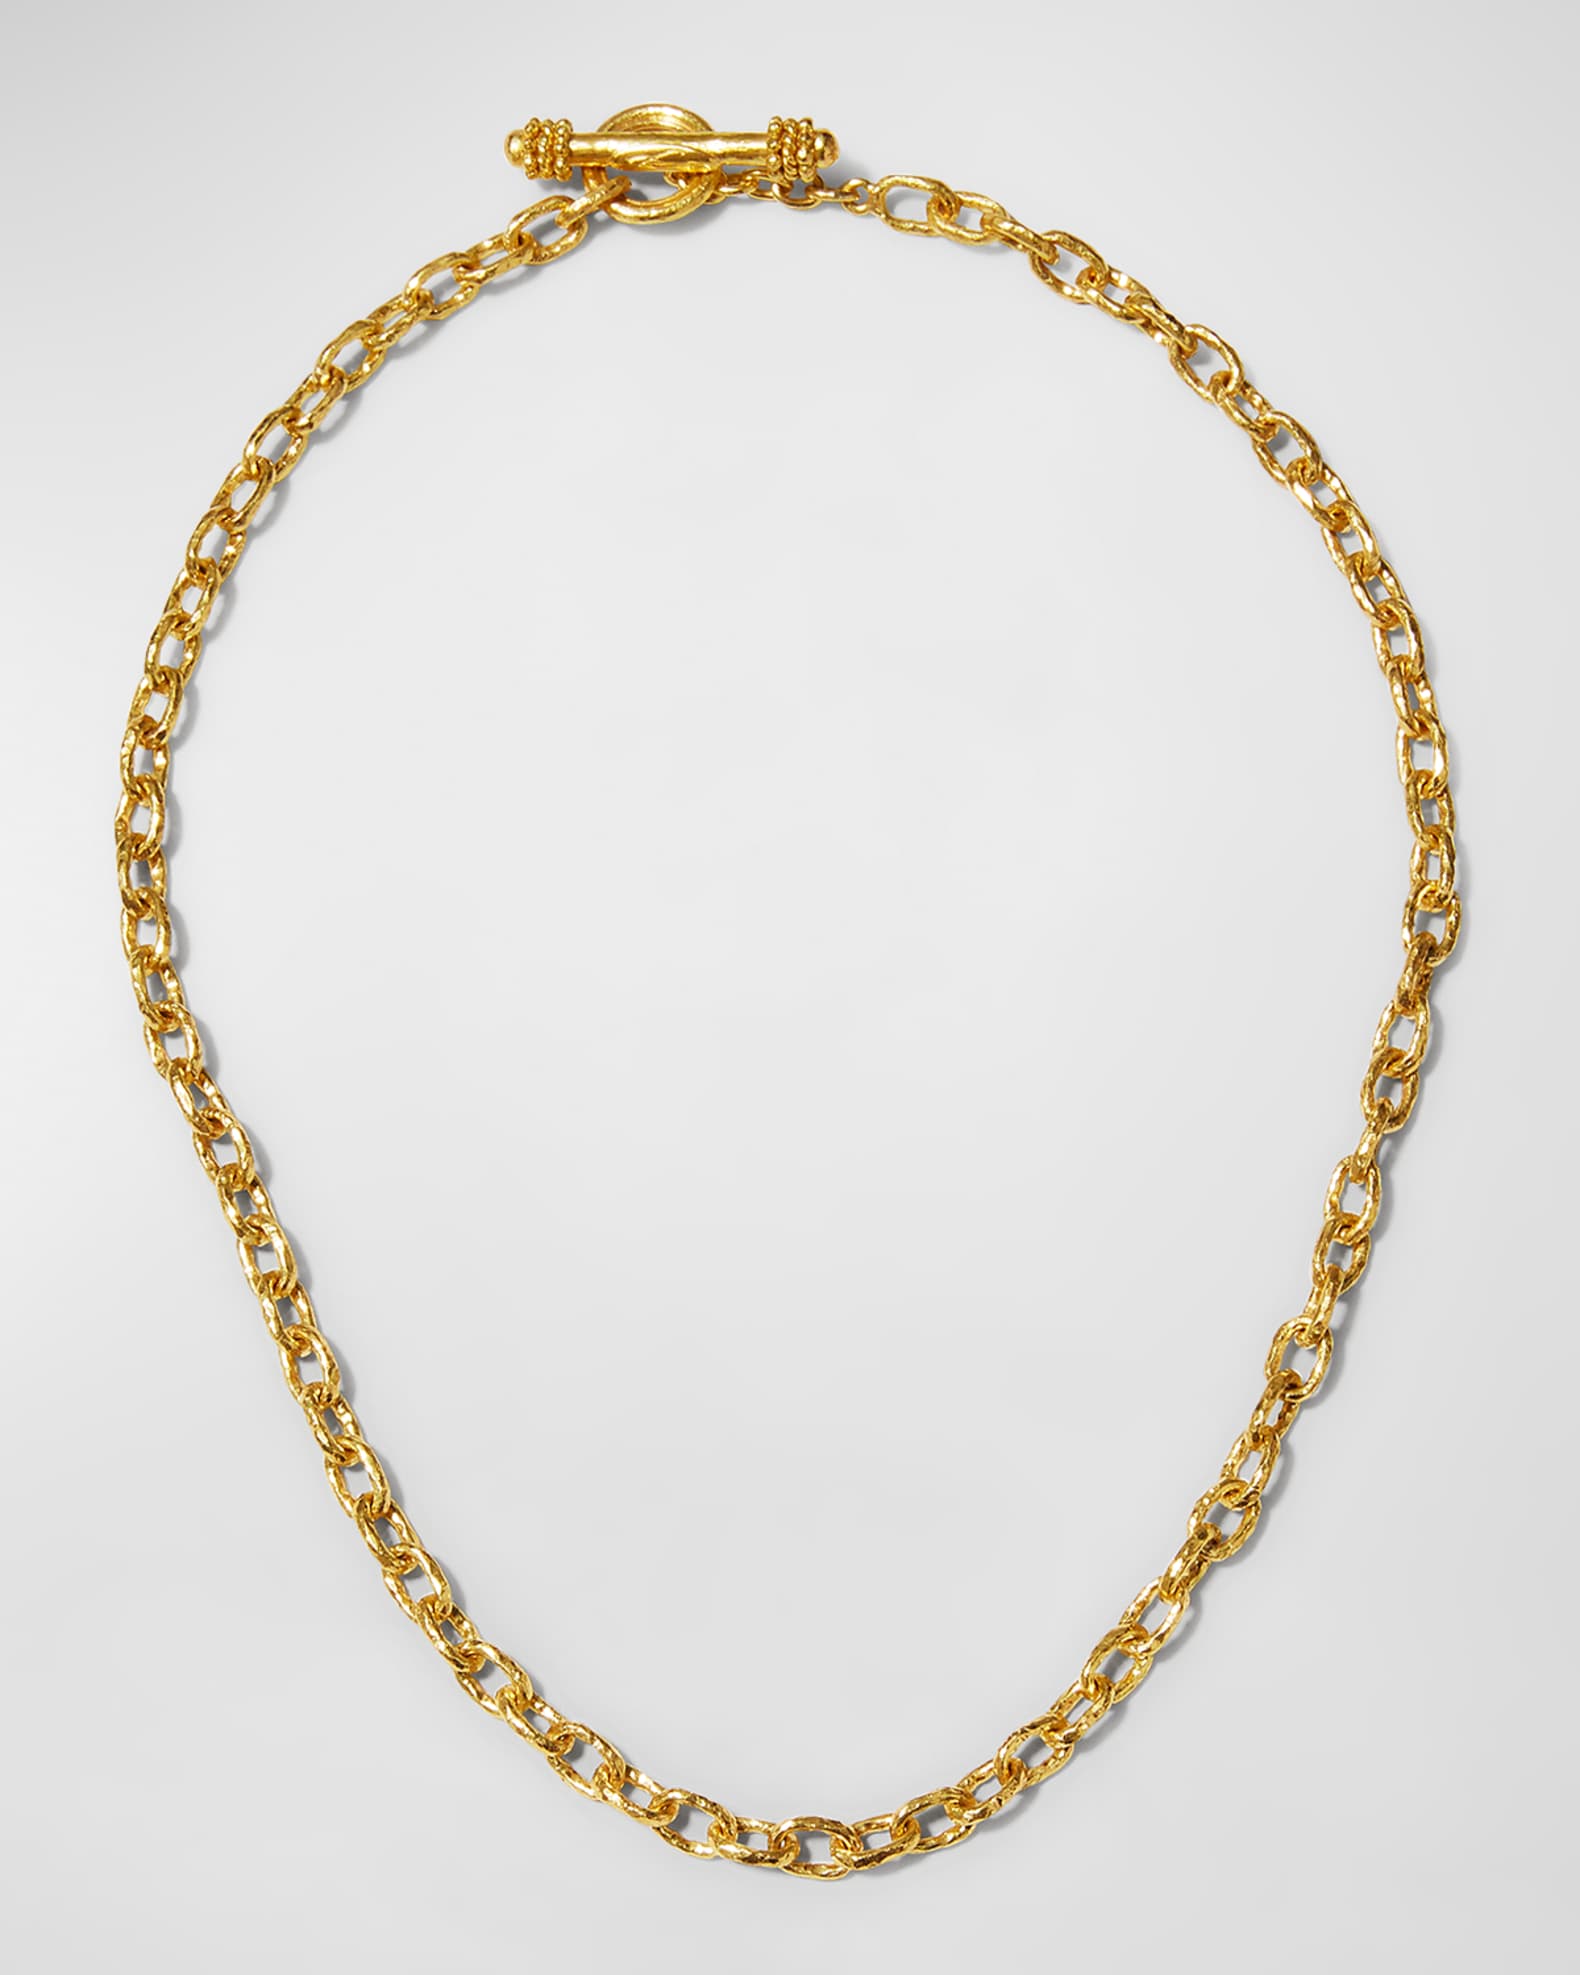 Elizabeth Locke Orvieto 19k Gold Link Necklace, 17